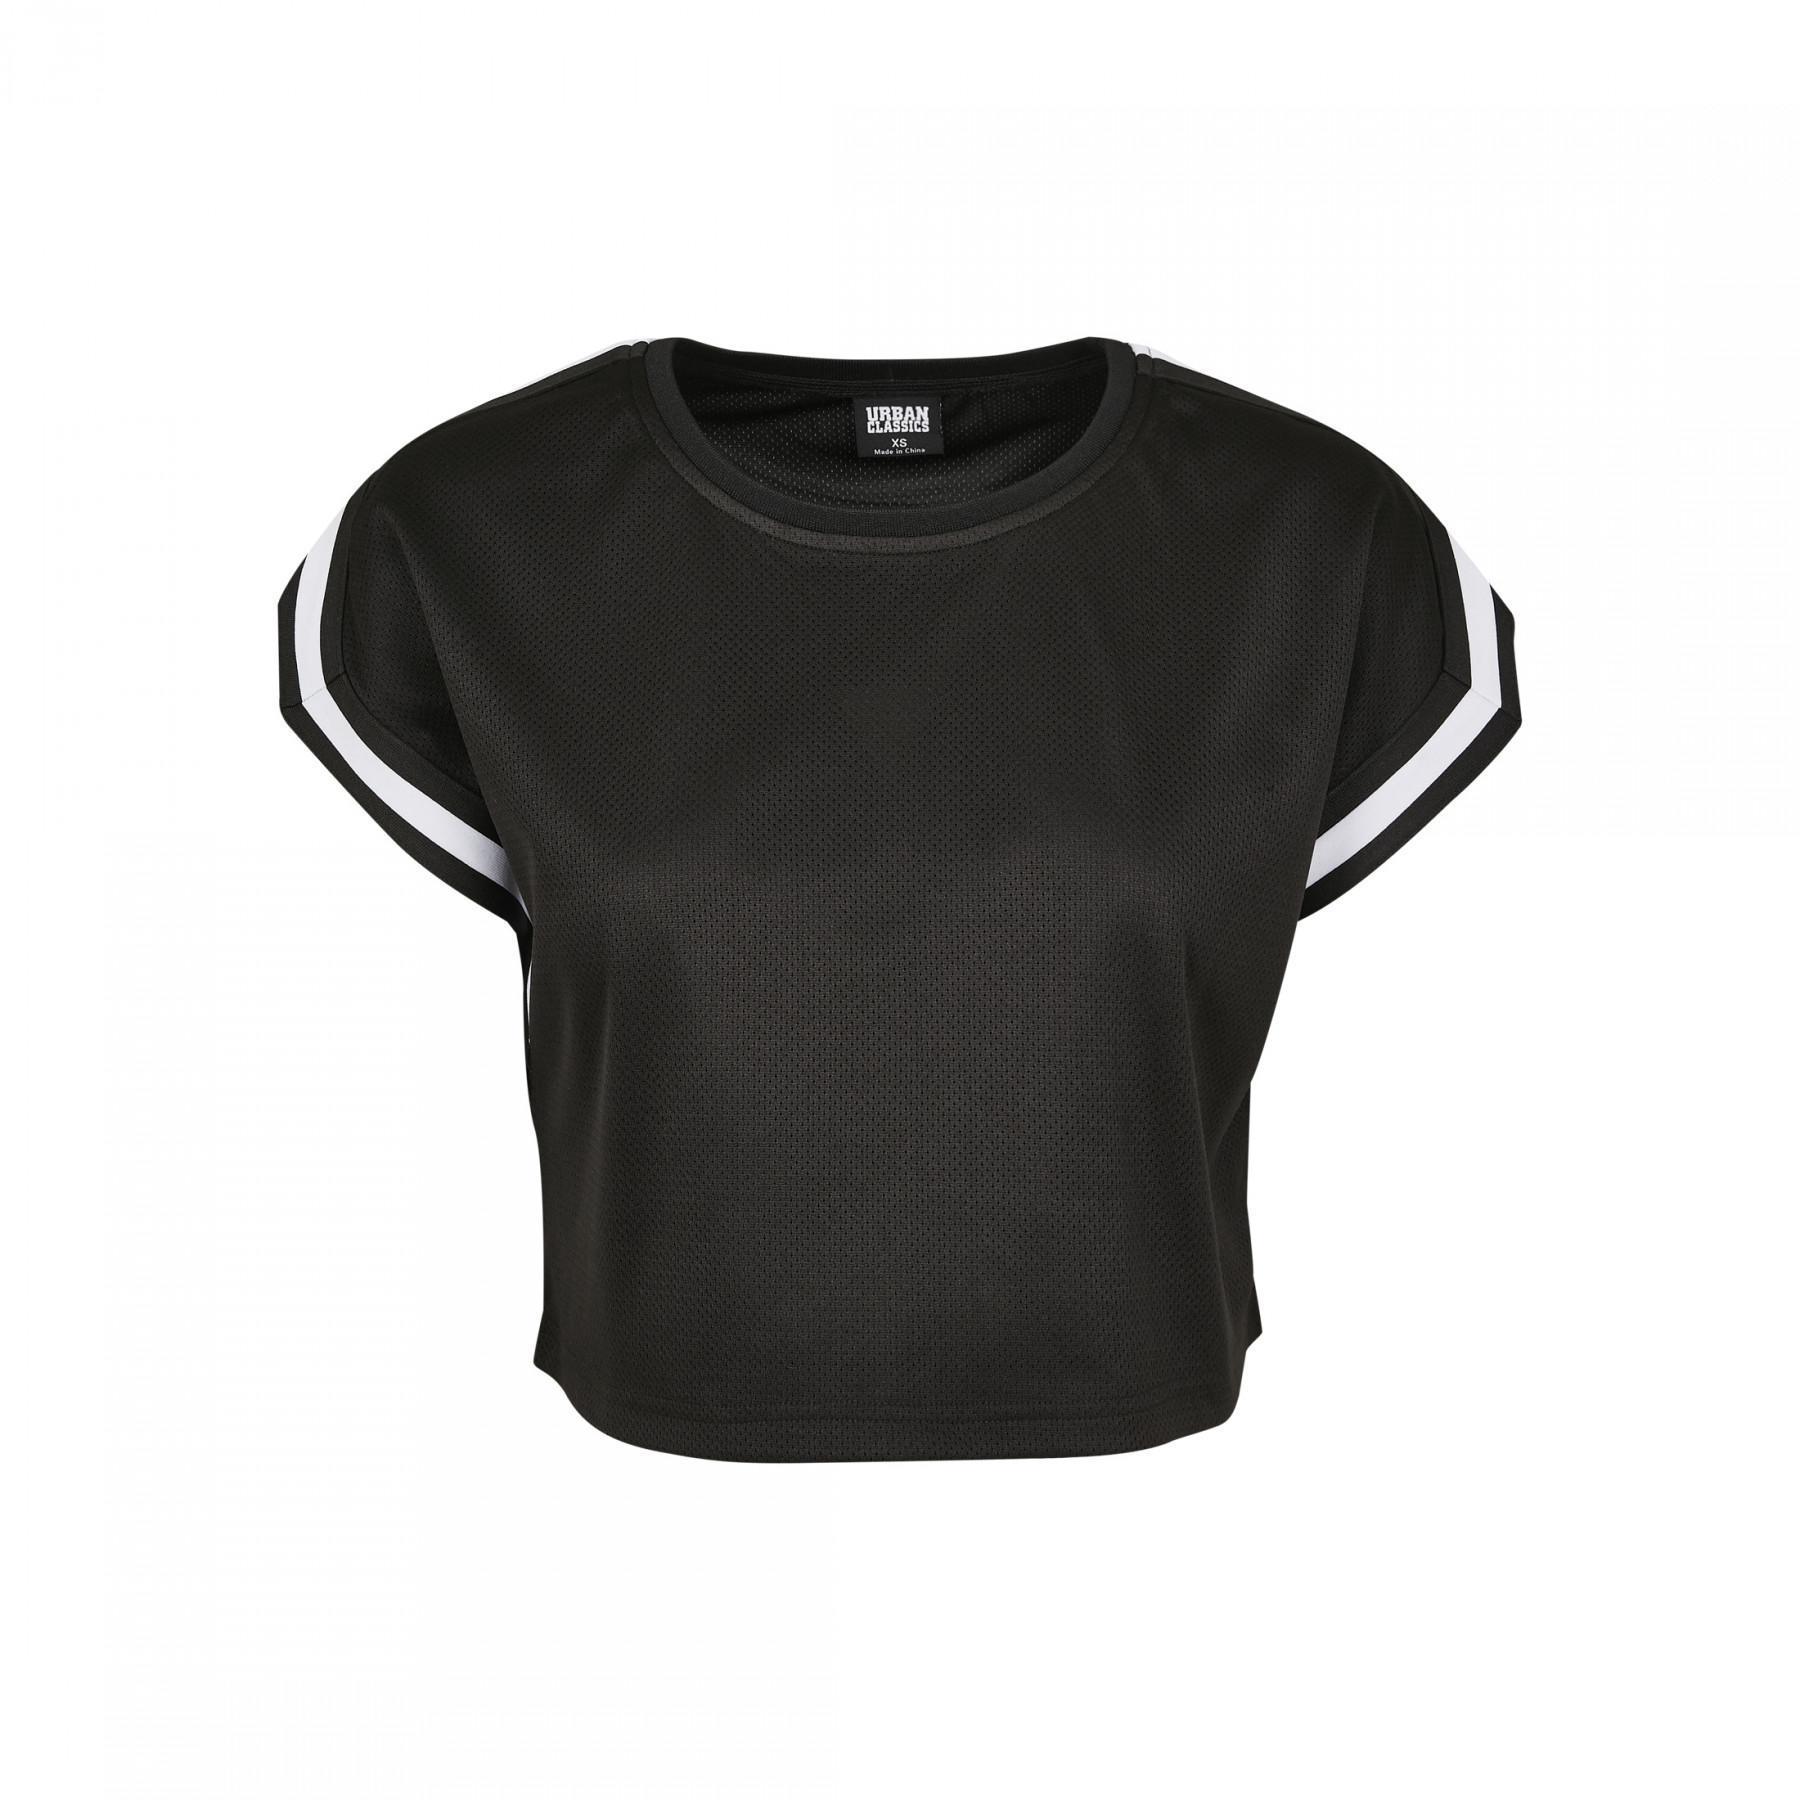 Woman's Urban Klassiek verlengd mesh T-shirt